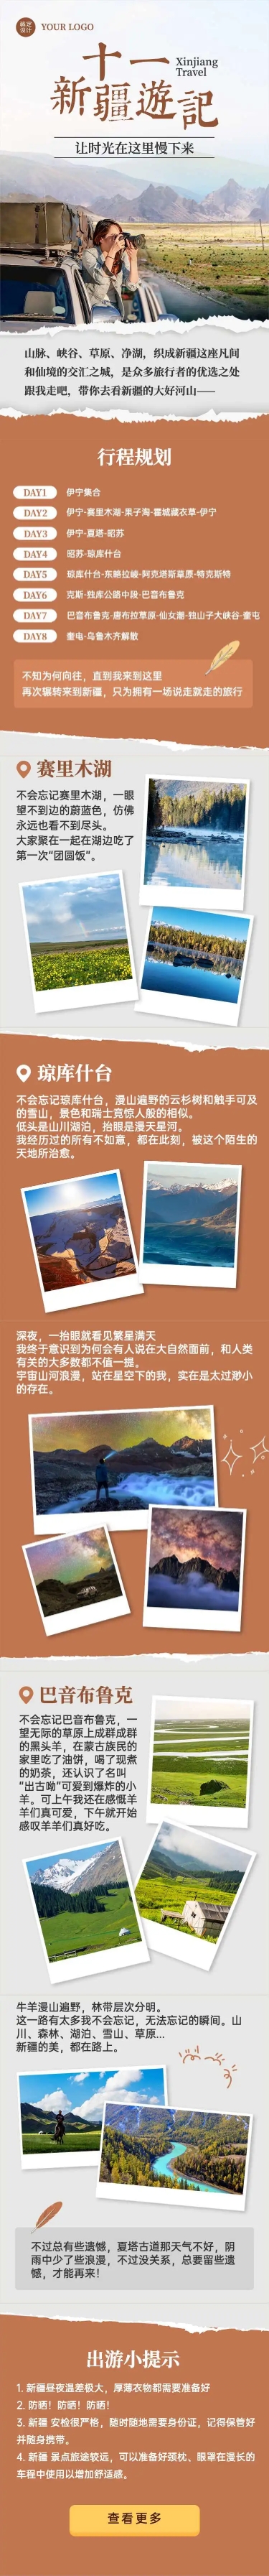 H5长页旅游国庆十一新疆旅拍游记文章